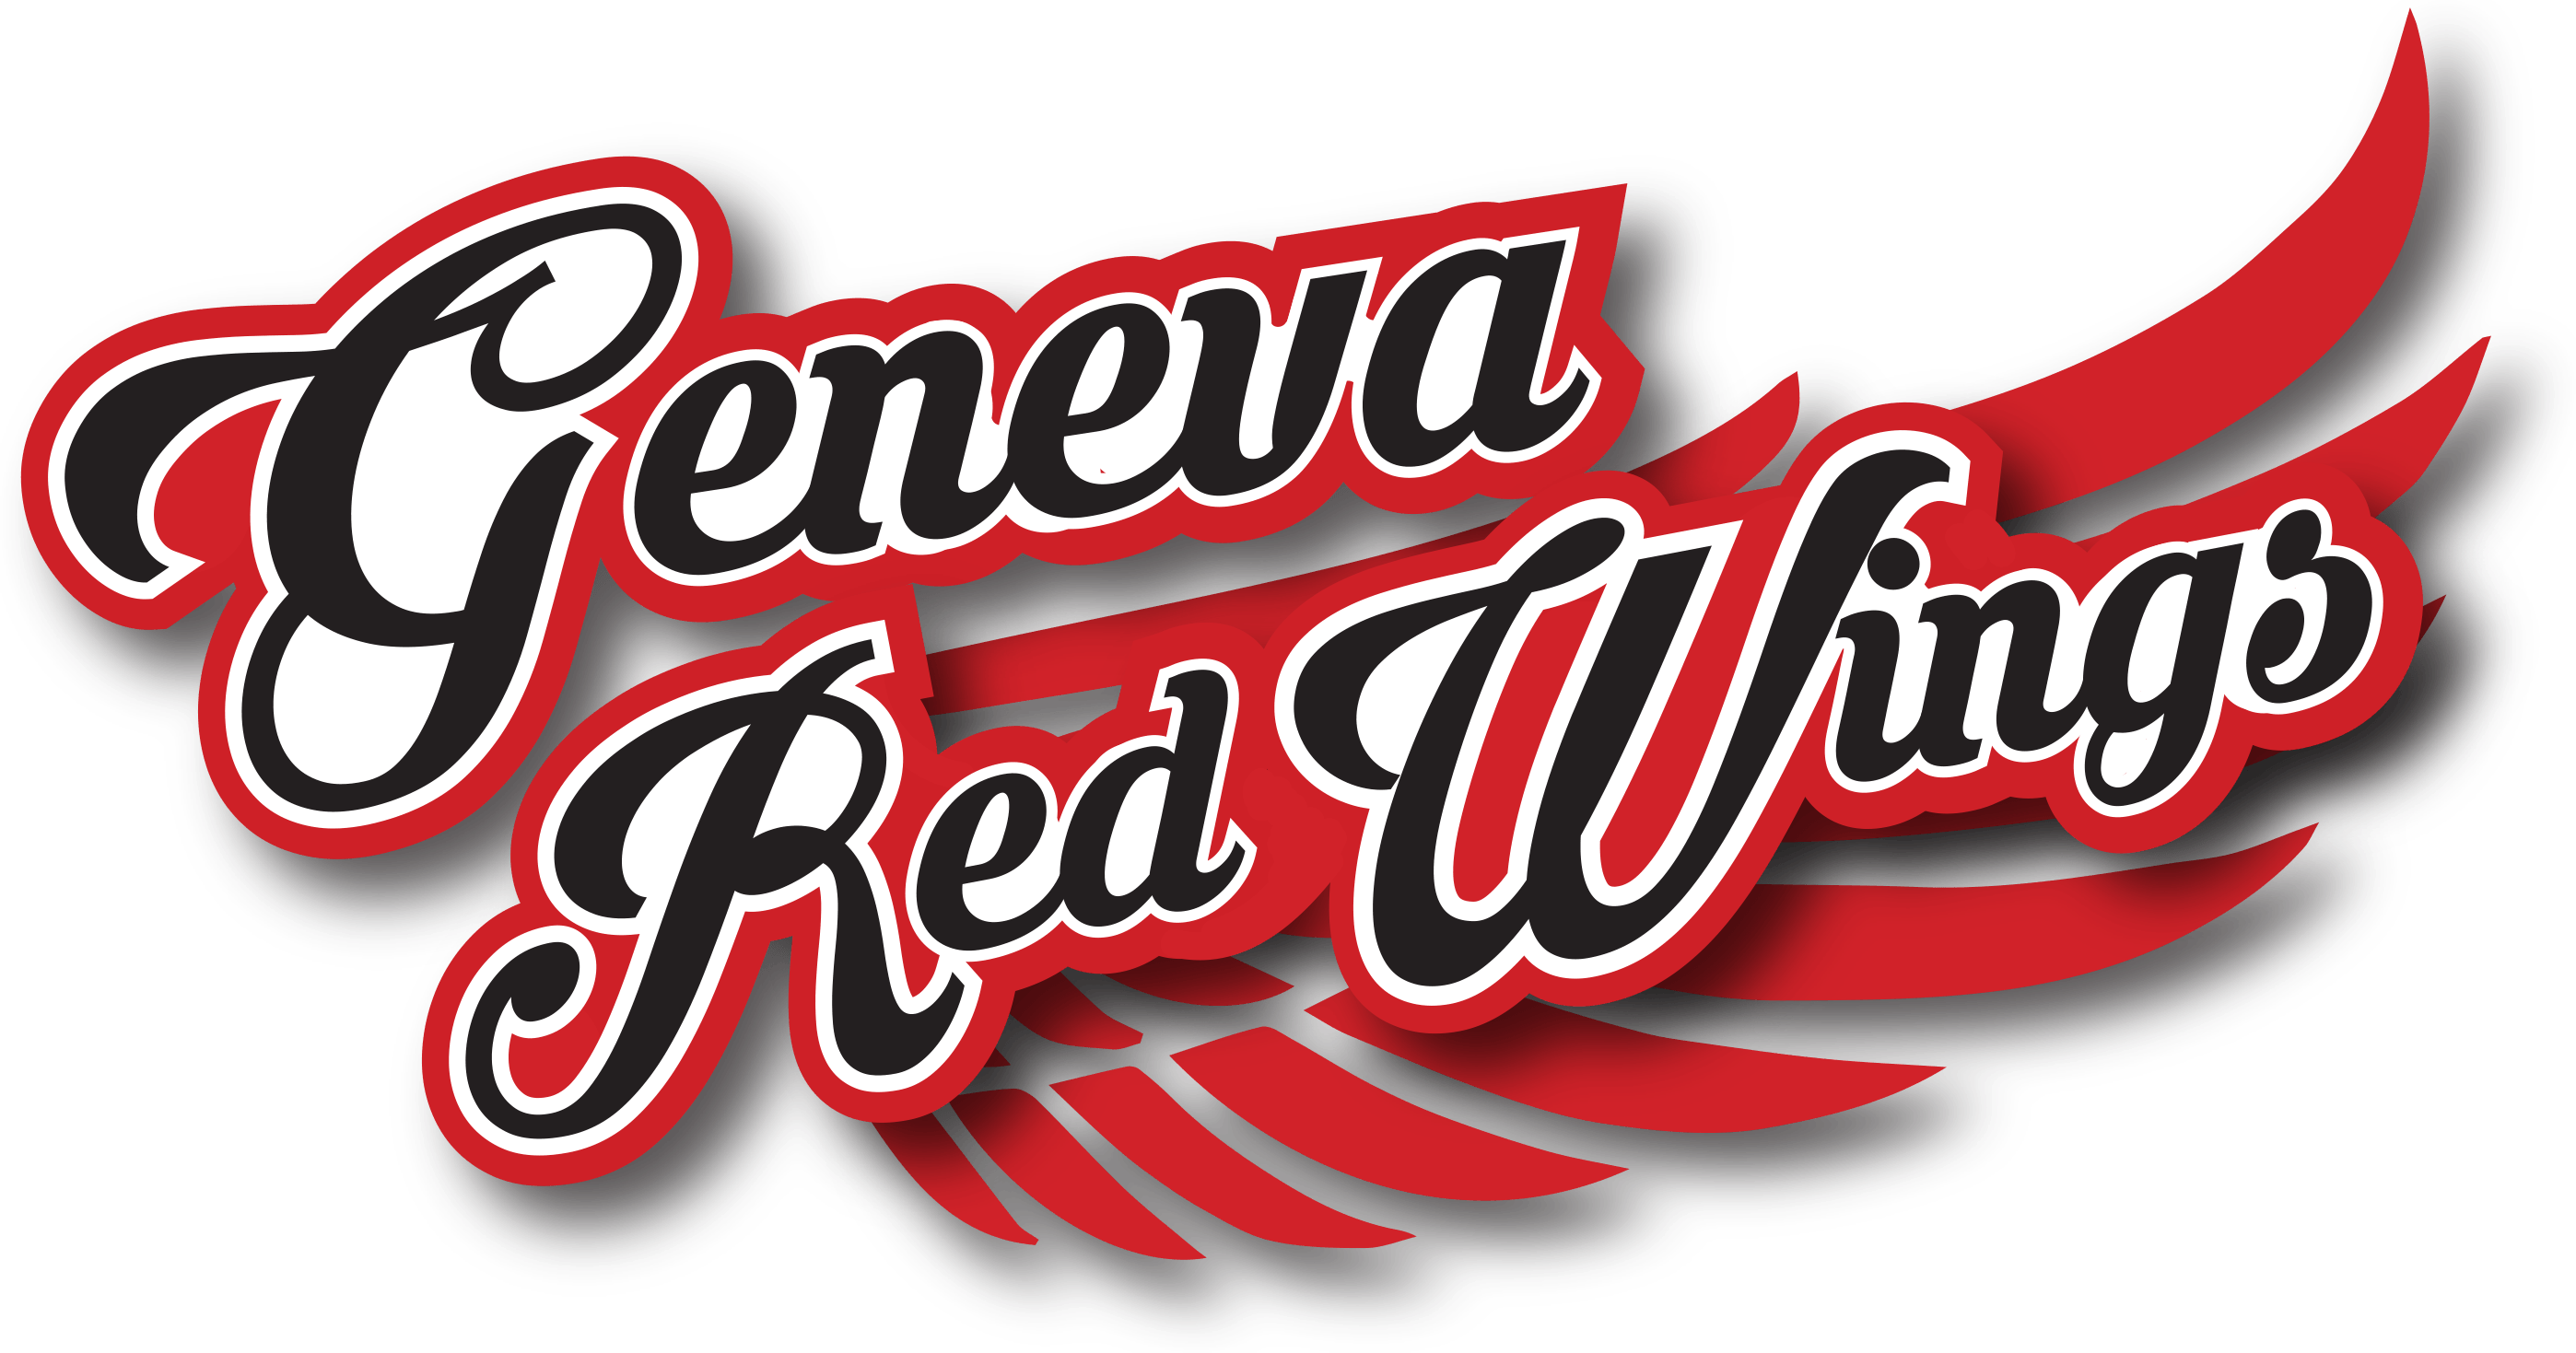 Red Wings Baseball Logo - Geneva RedWings Baseball. Geneva, NY